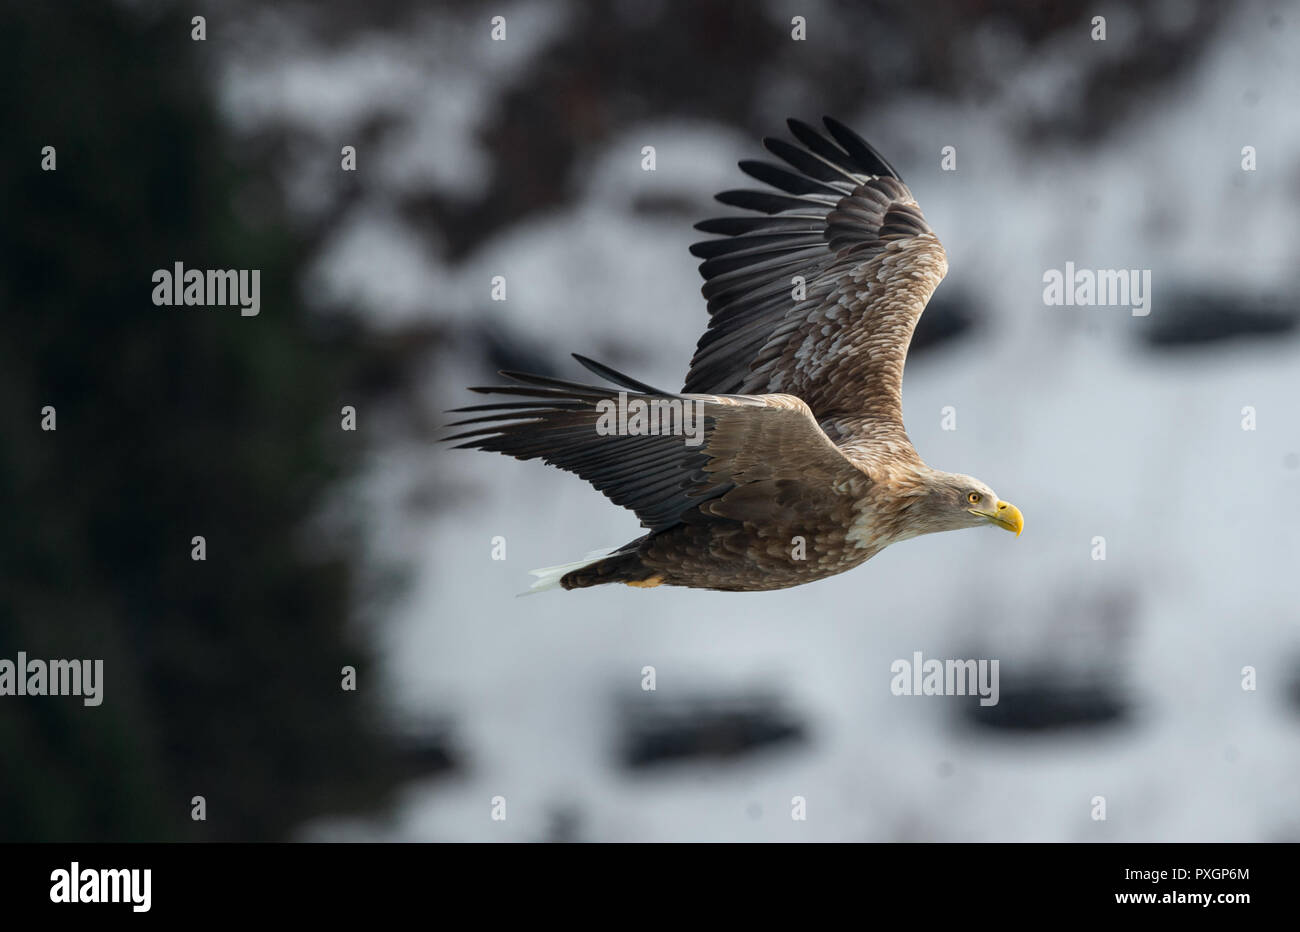 Adult White tailed eagle in flight. On Winter background. Scientific name: Haliaeetus albicilla, the ern, erne, gray eagle, Eurasian sea eagle and whi Stock Photo